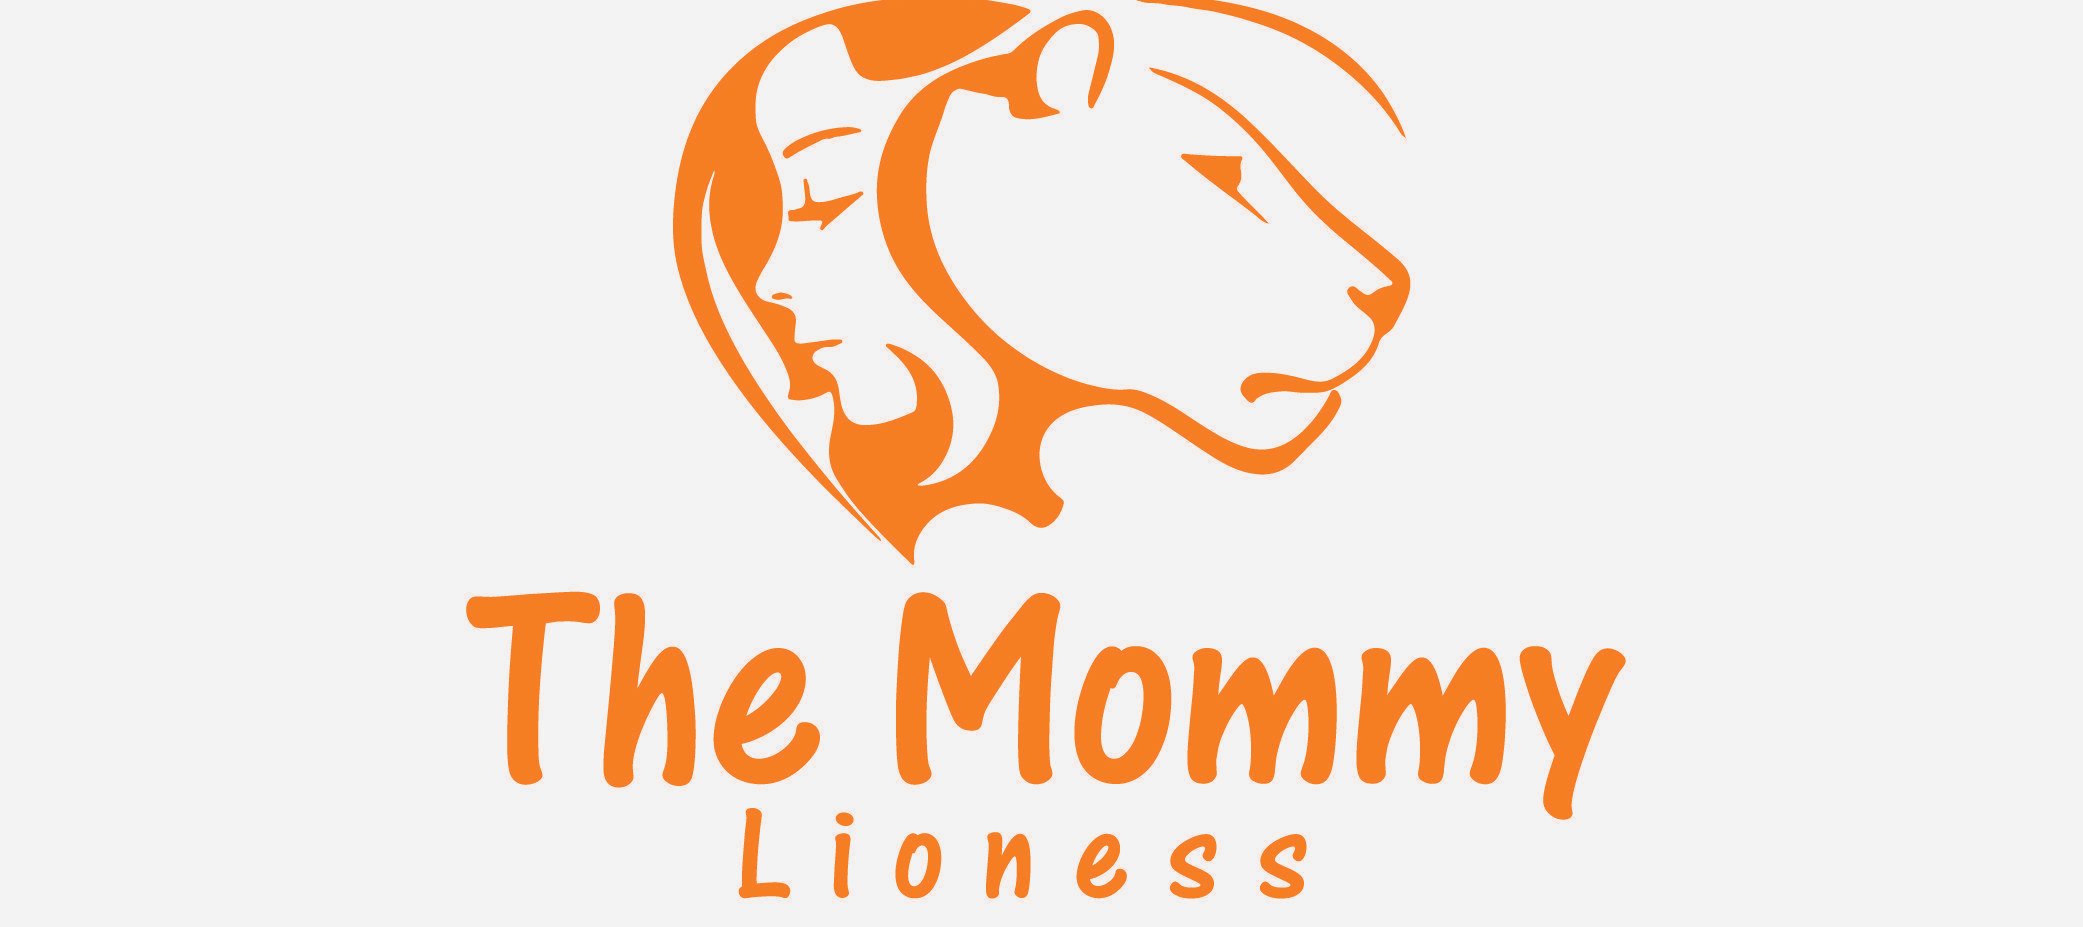 Lioness Logo - Image result for lioness logo. vitaleo voce logo